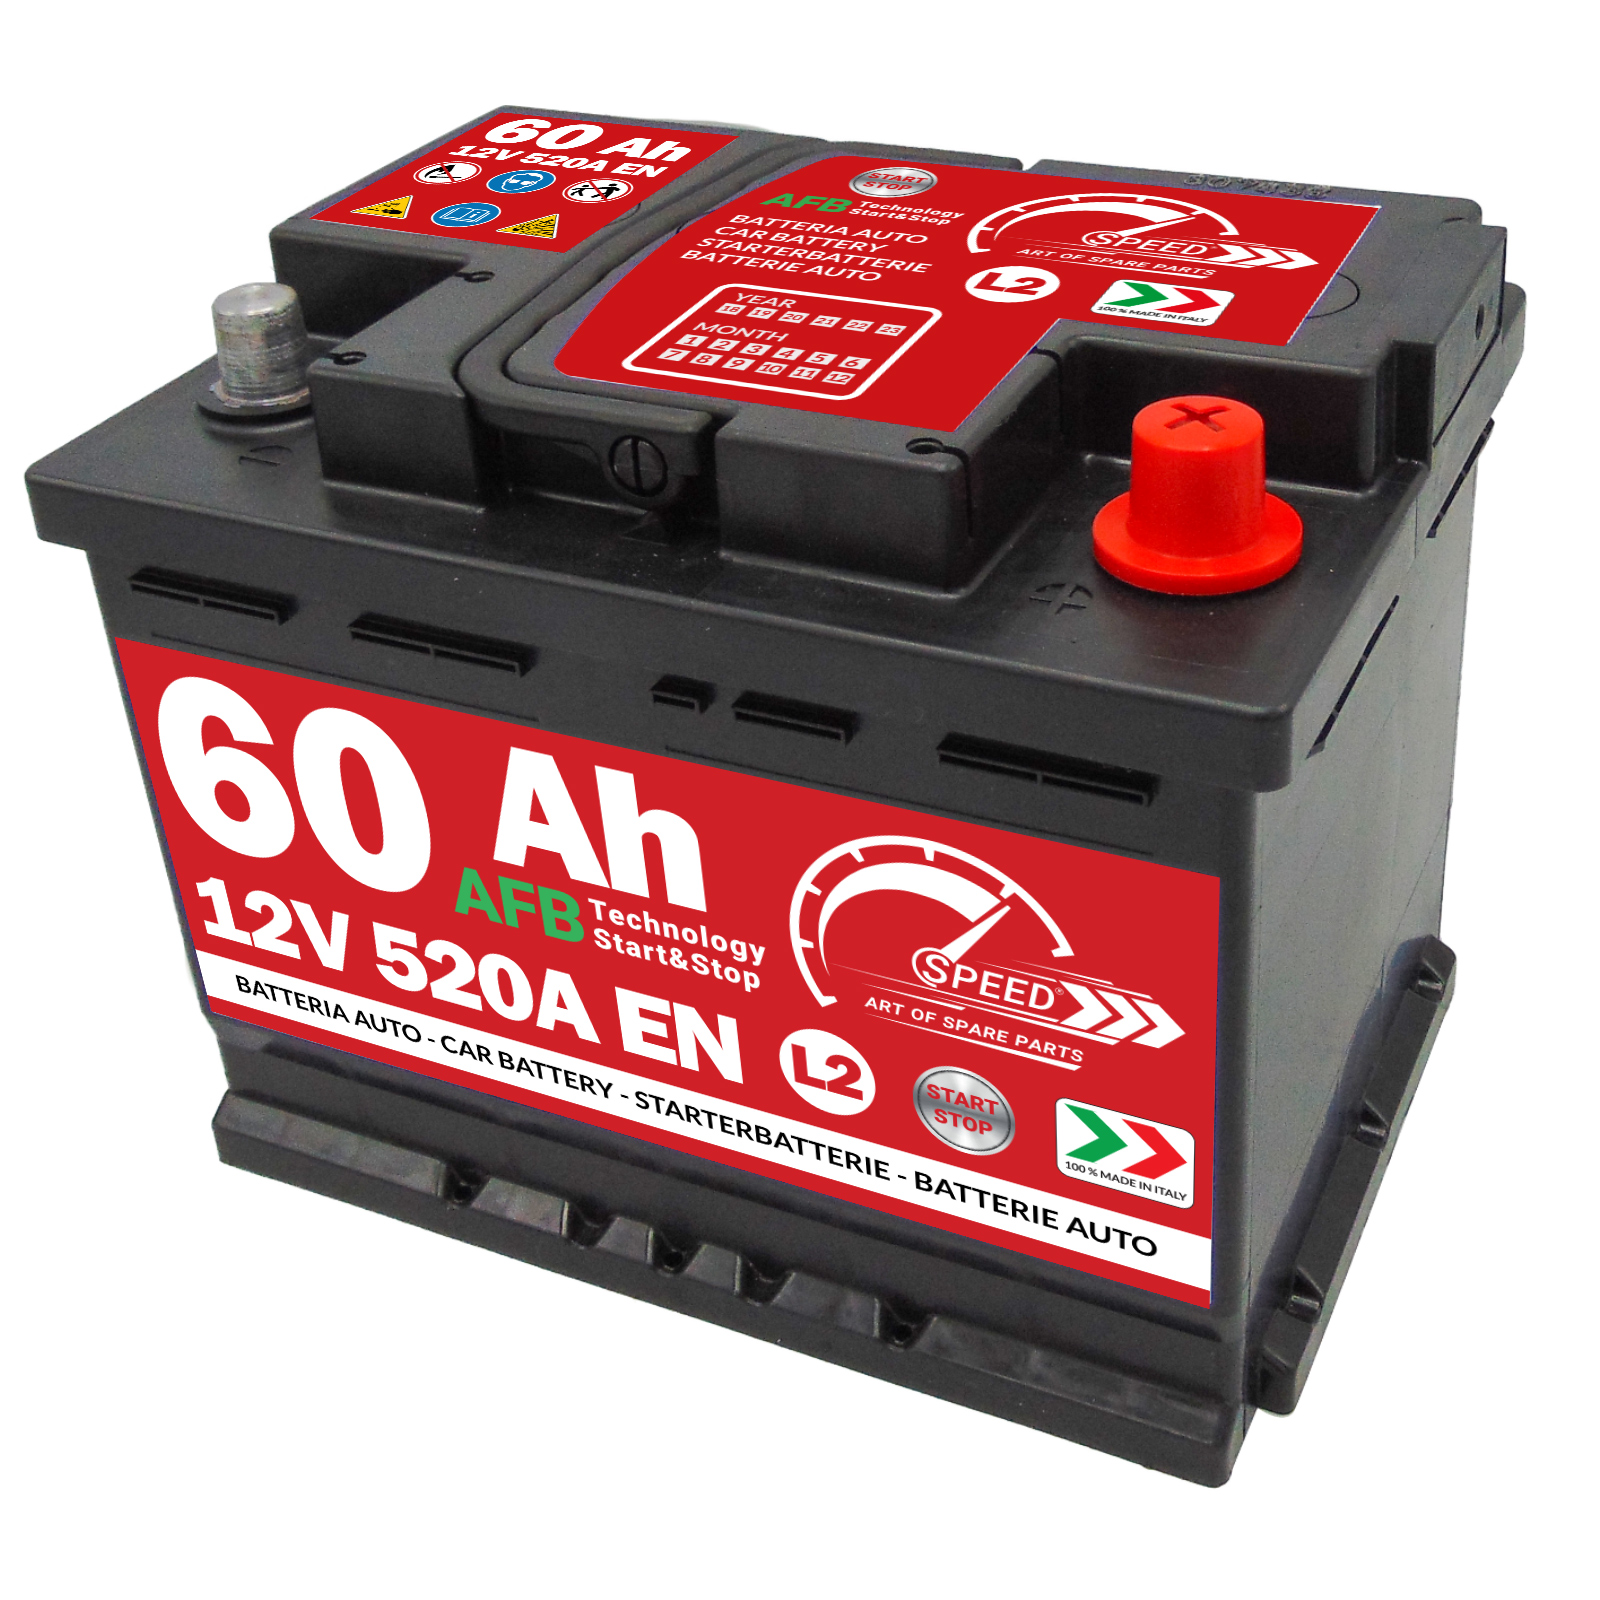 Batteria Auto Speed 60Ah 520A Start&Stop AFB - Ricambi auto SMC